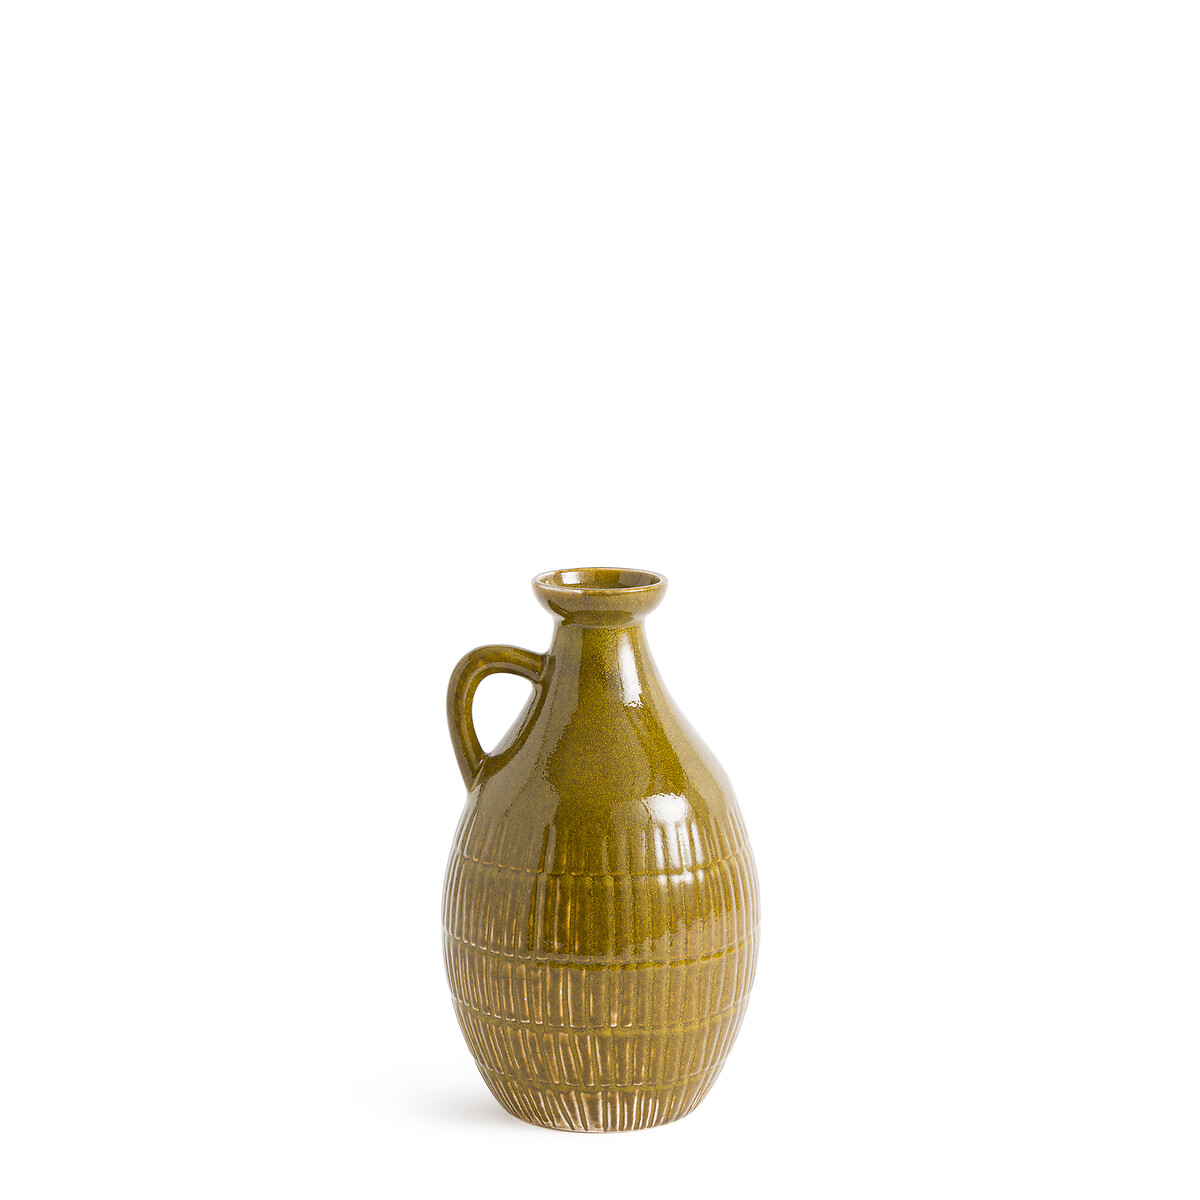 Elie 29cm High Decorative Earthenware Amphora Vase